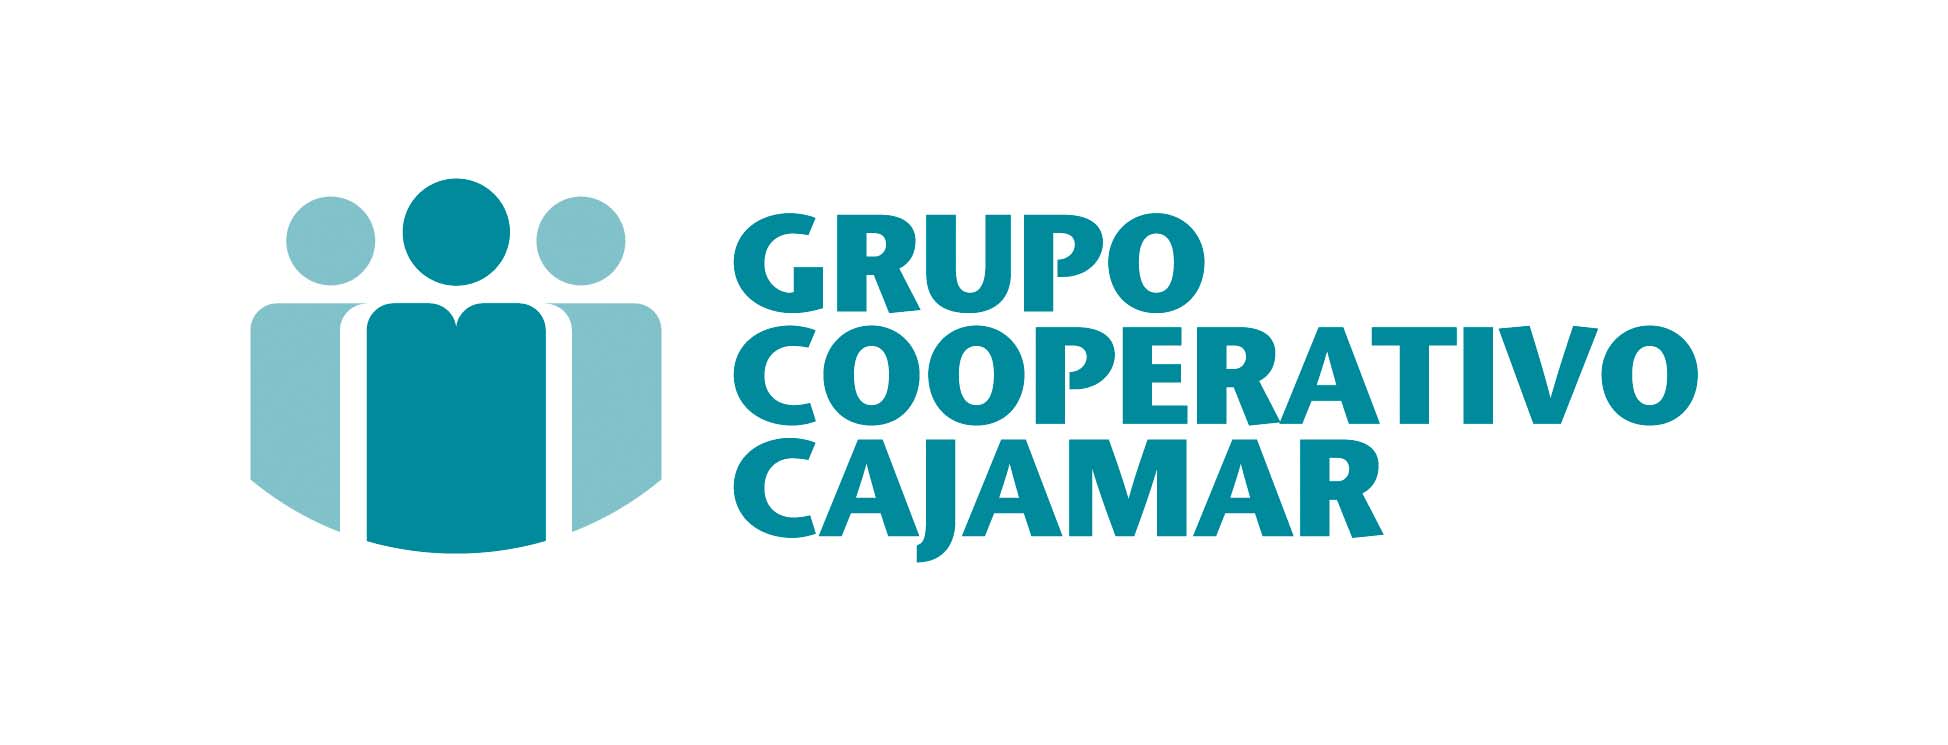 Grupo cooperativo cajamar